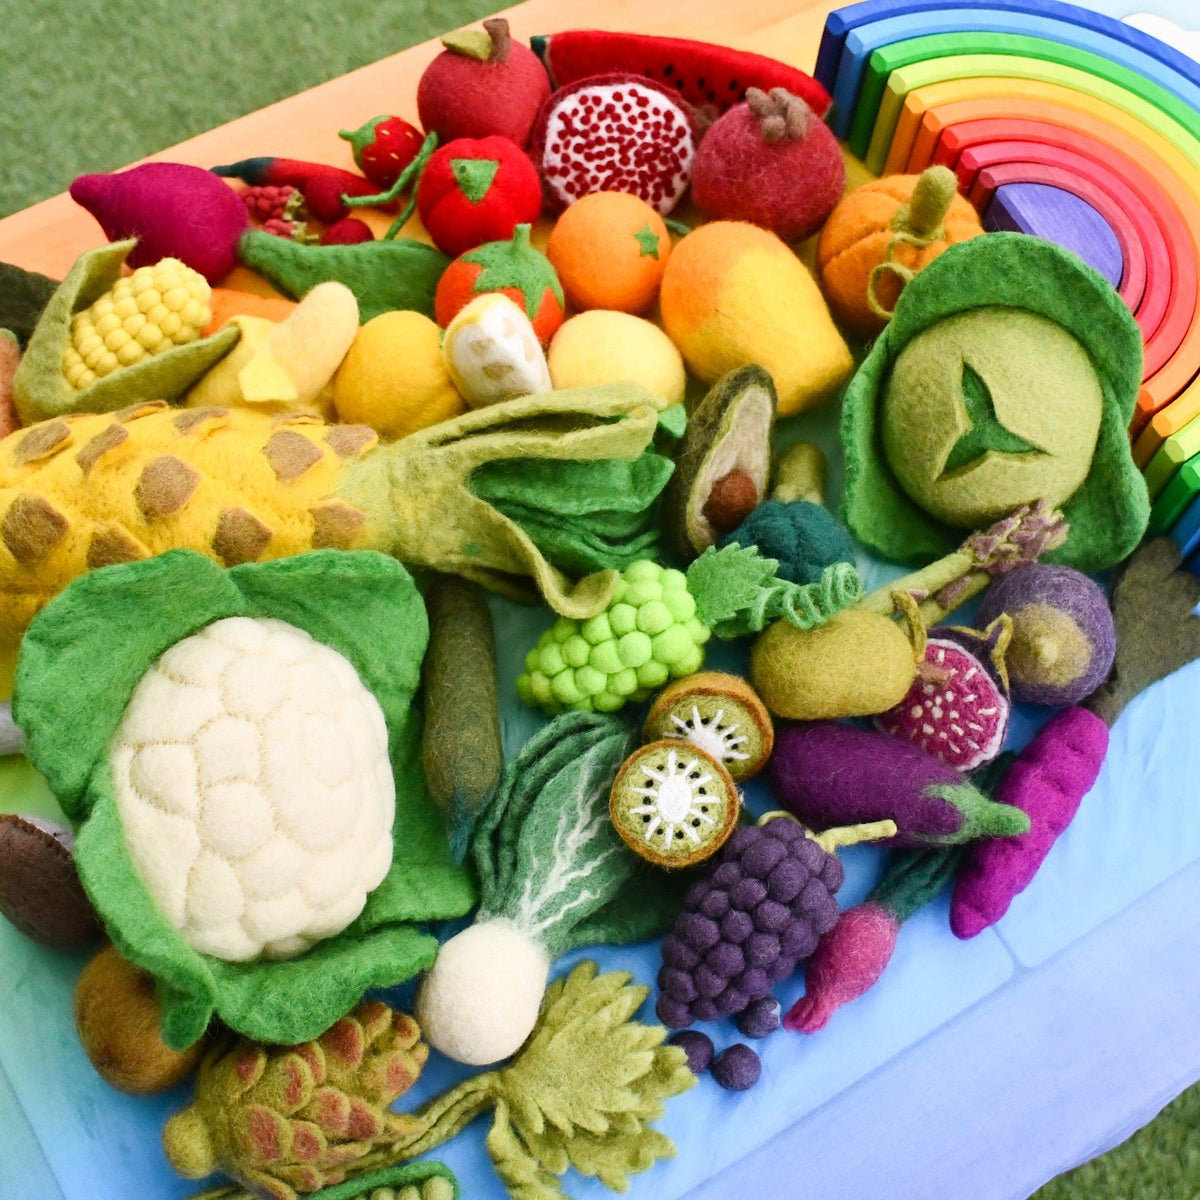 Felt Vegetables and Fruits Set - 12 pieces